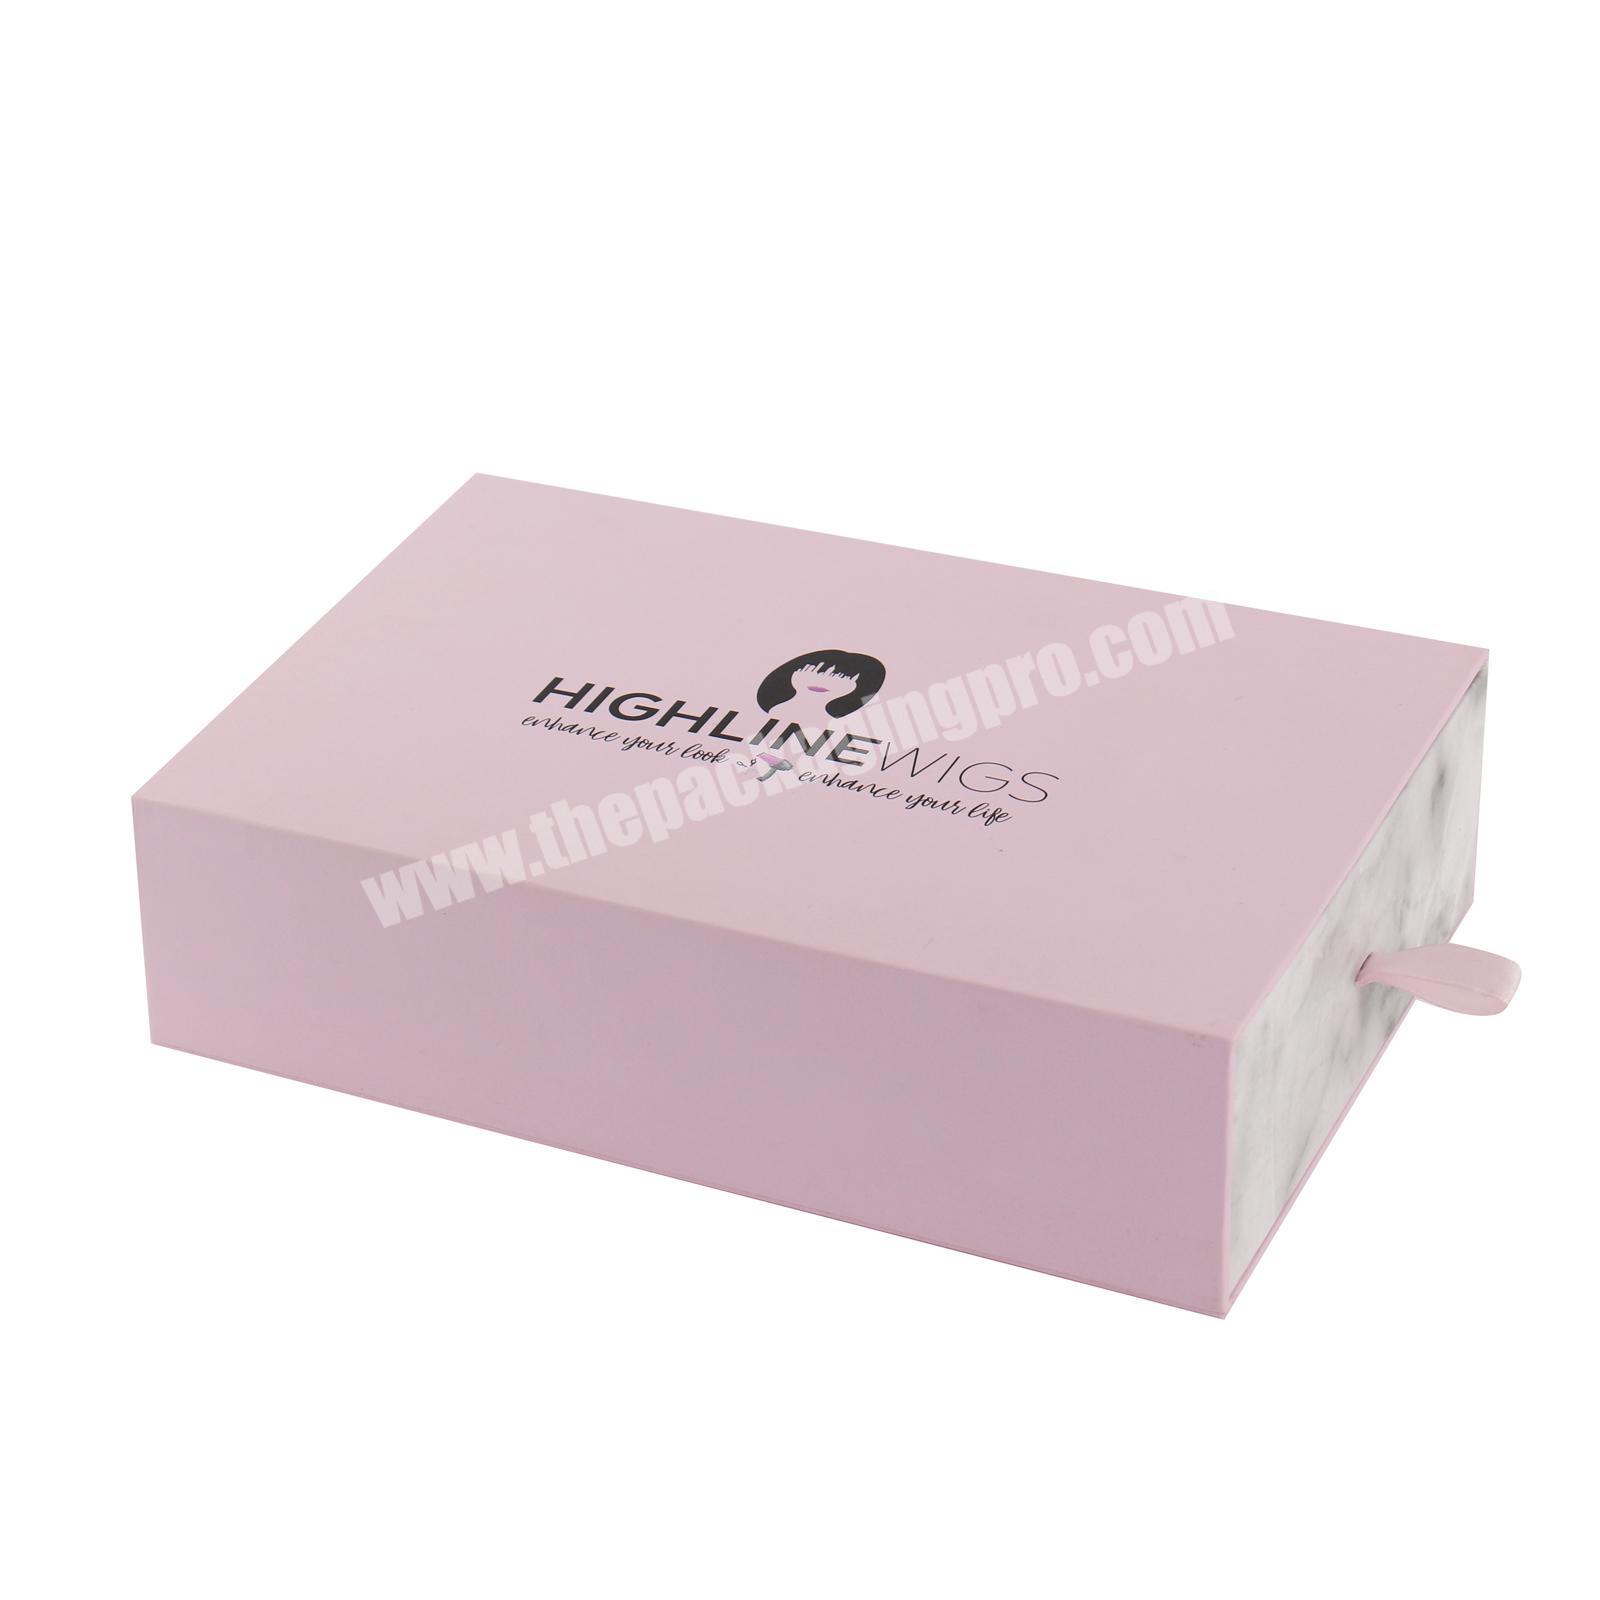 Deluxe custom LOGO drawer sponge magnetic jewelry box cardboard packaging gift box sealed gift box